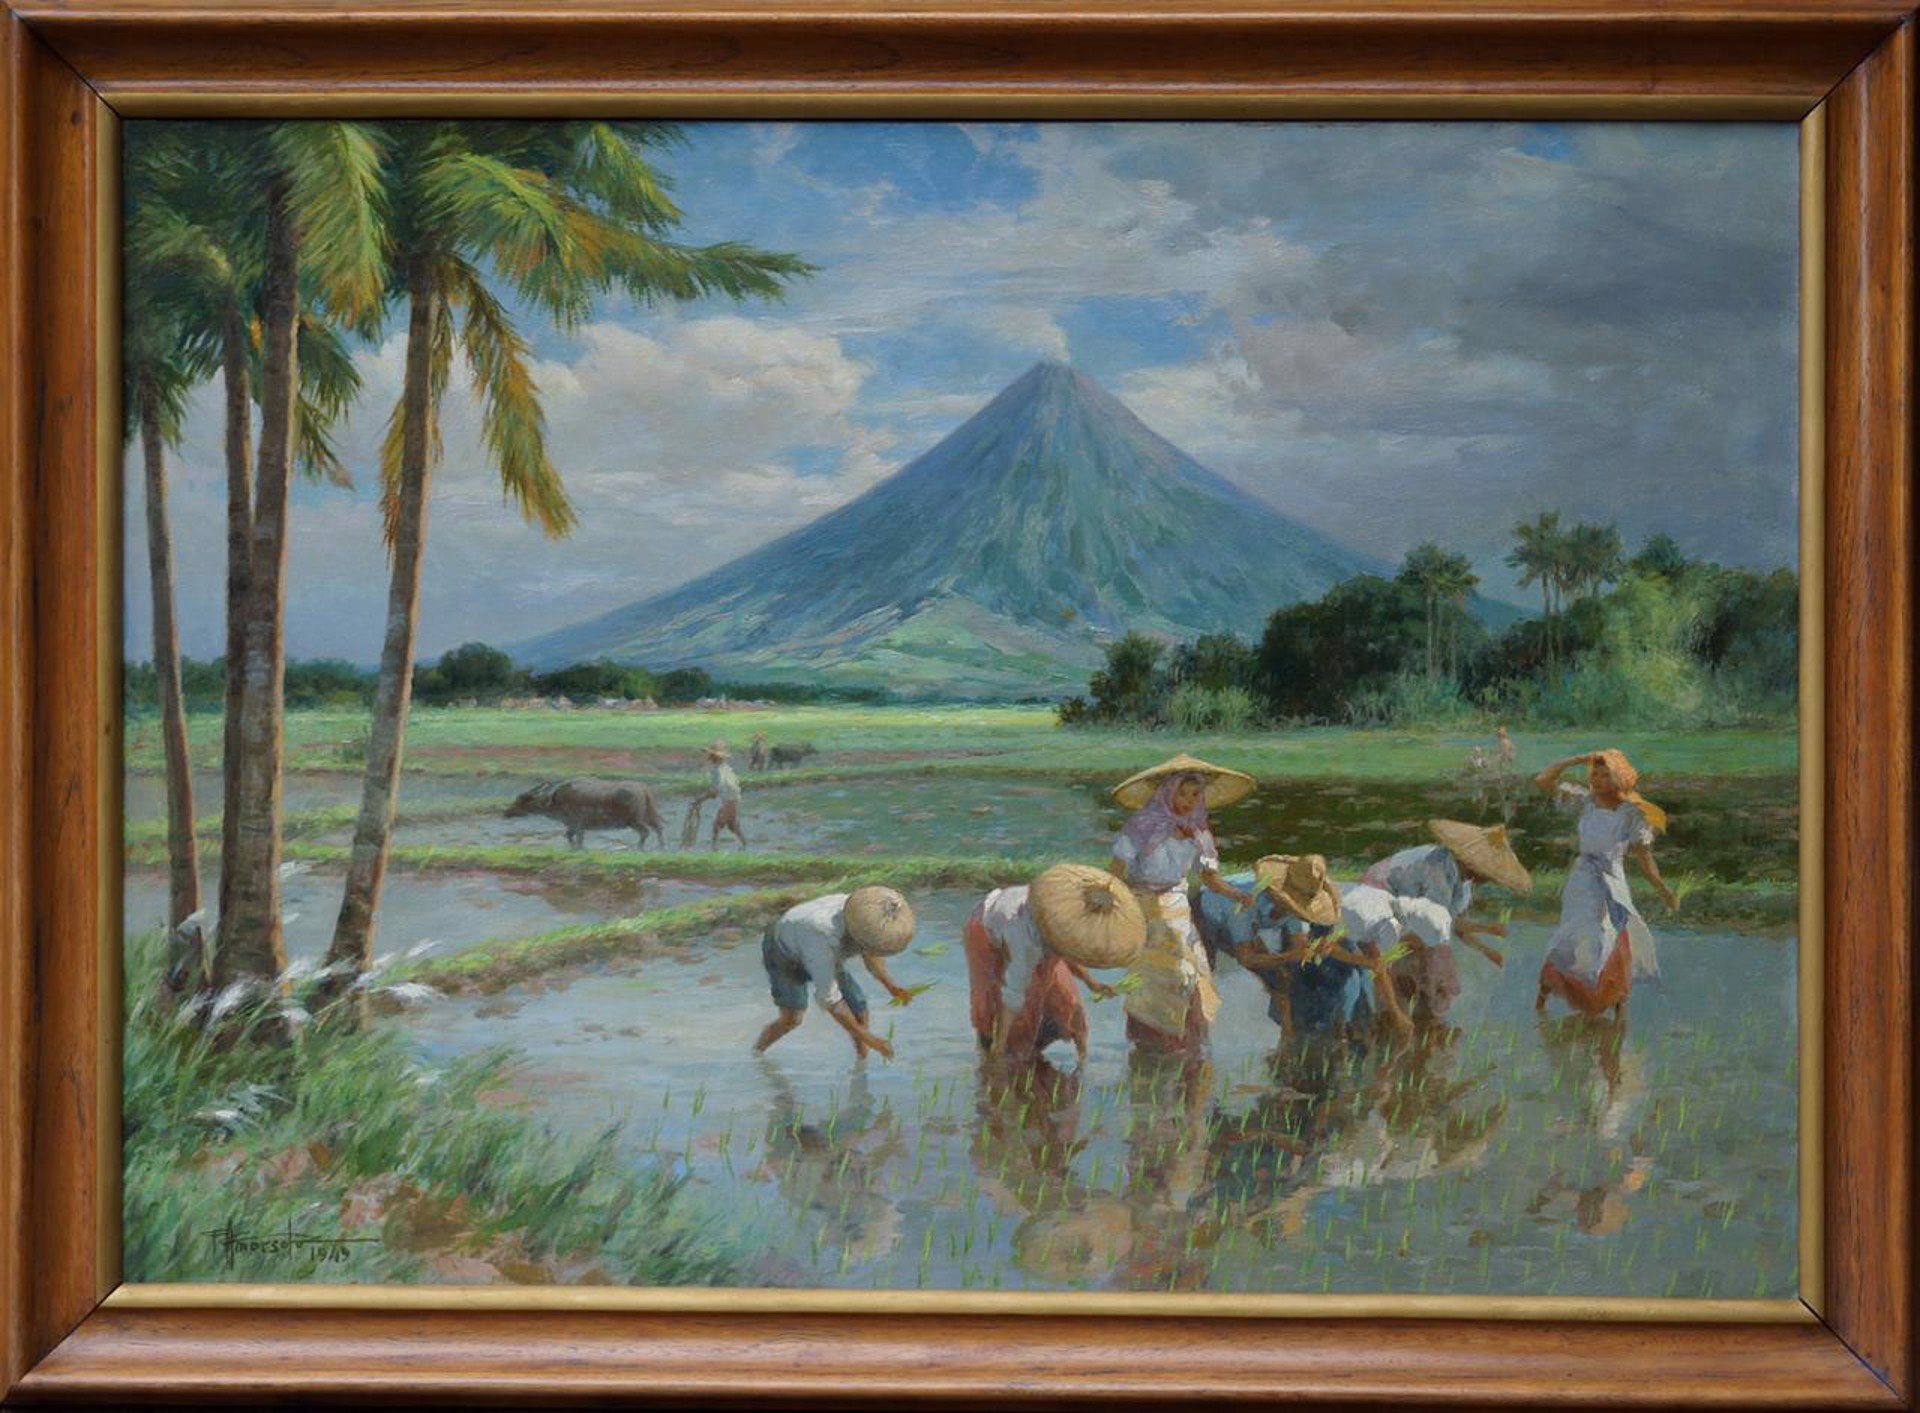 Rice Planting near Mayon Volcano by Fernando Amorsolo